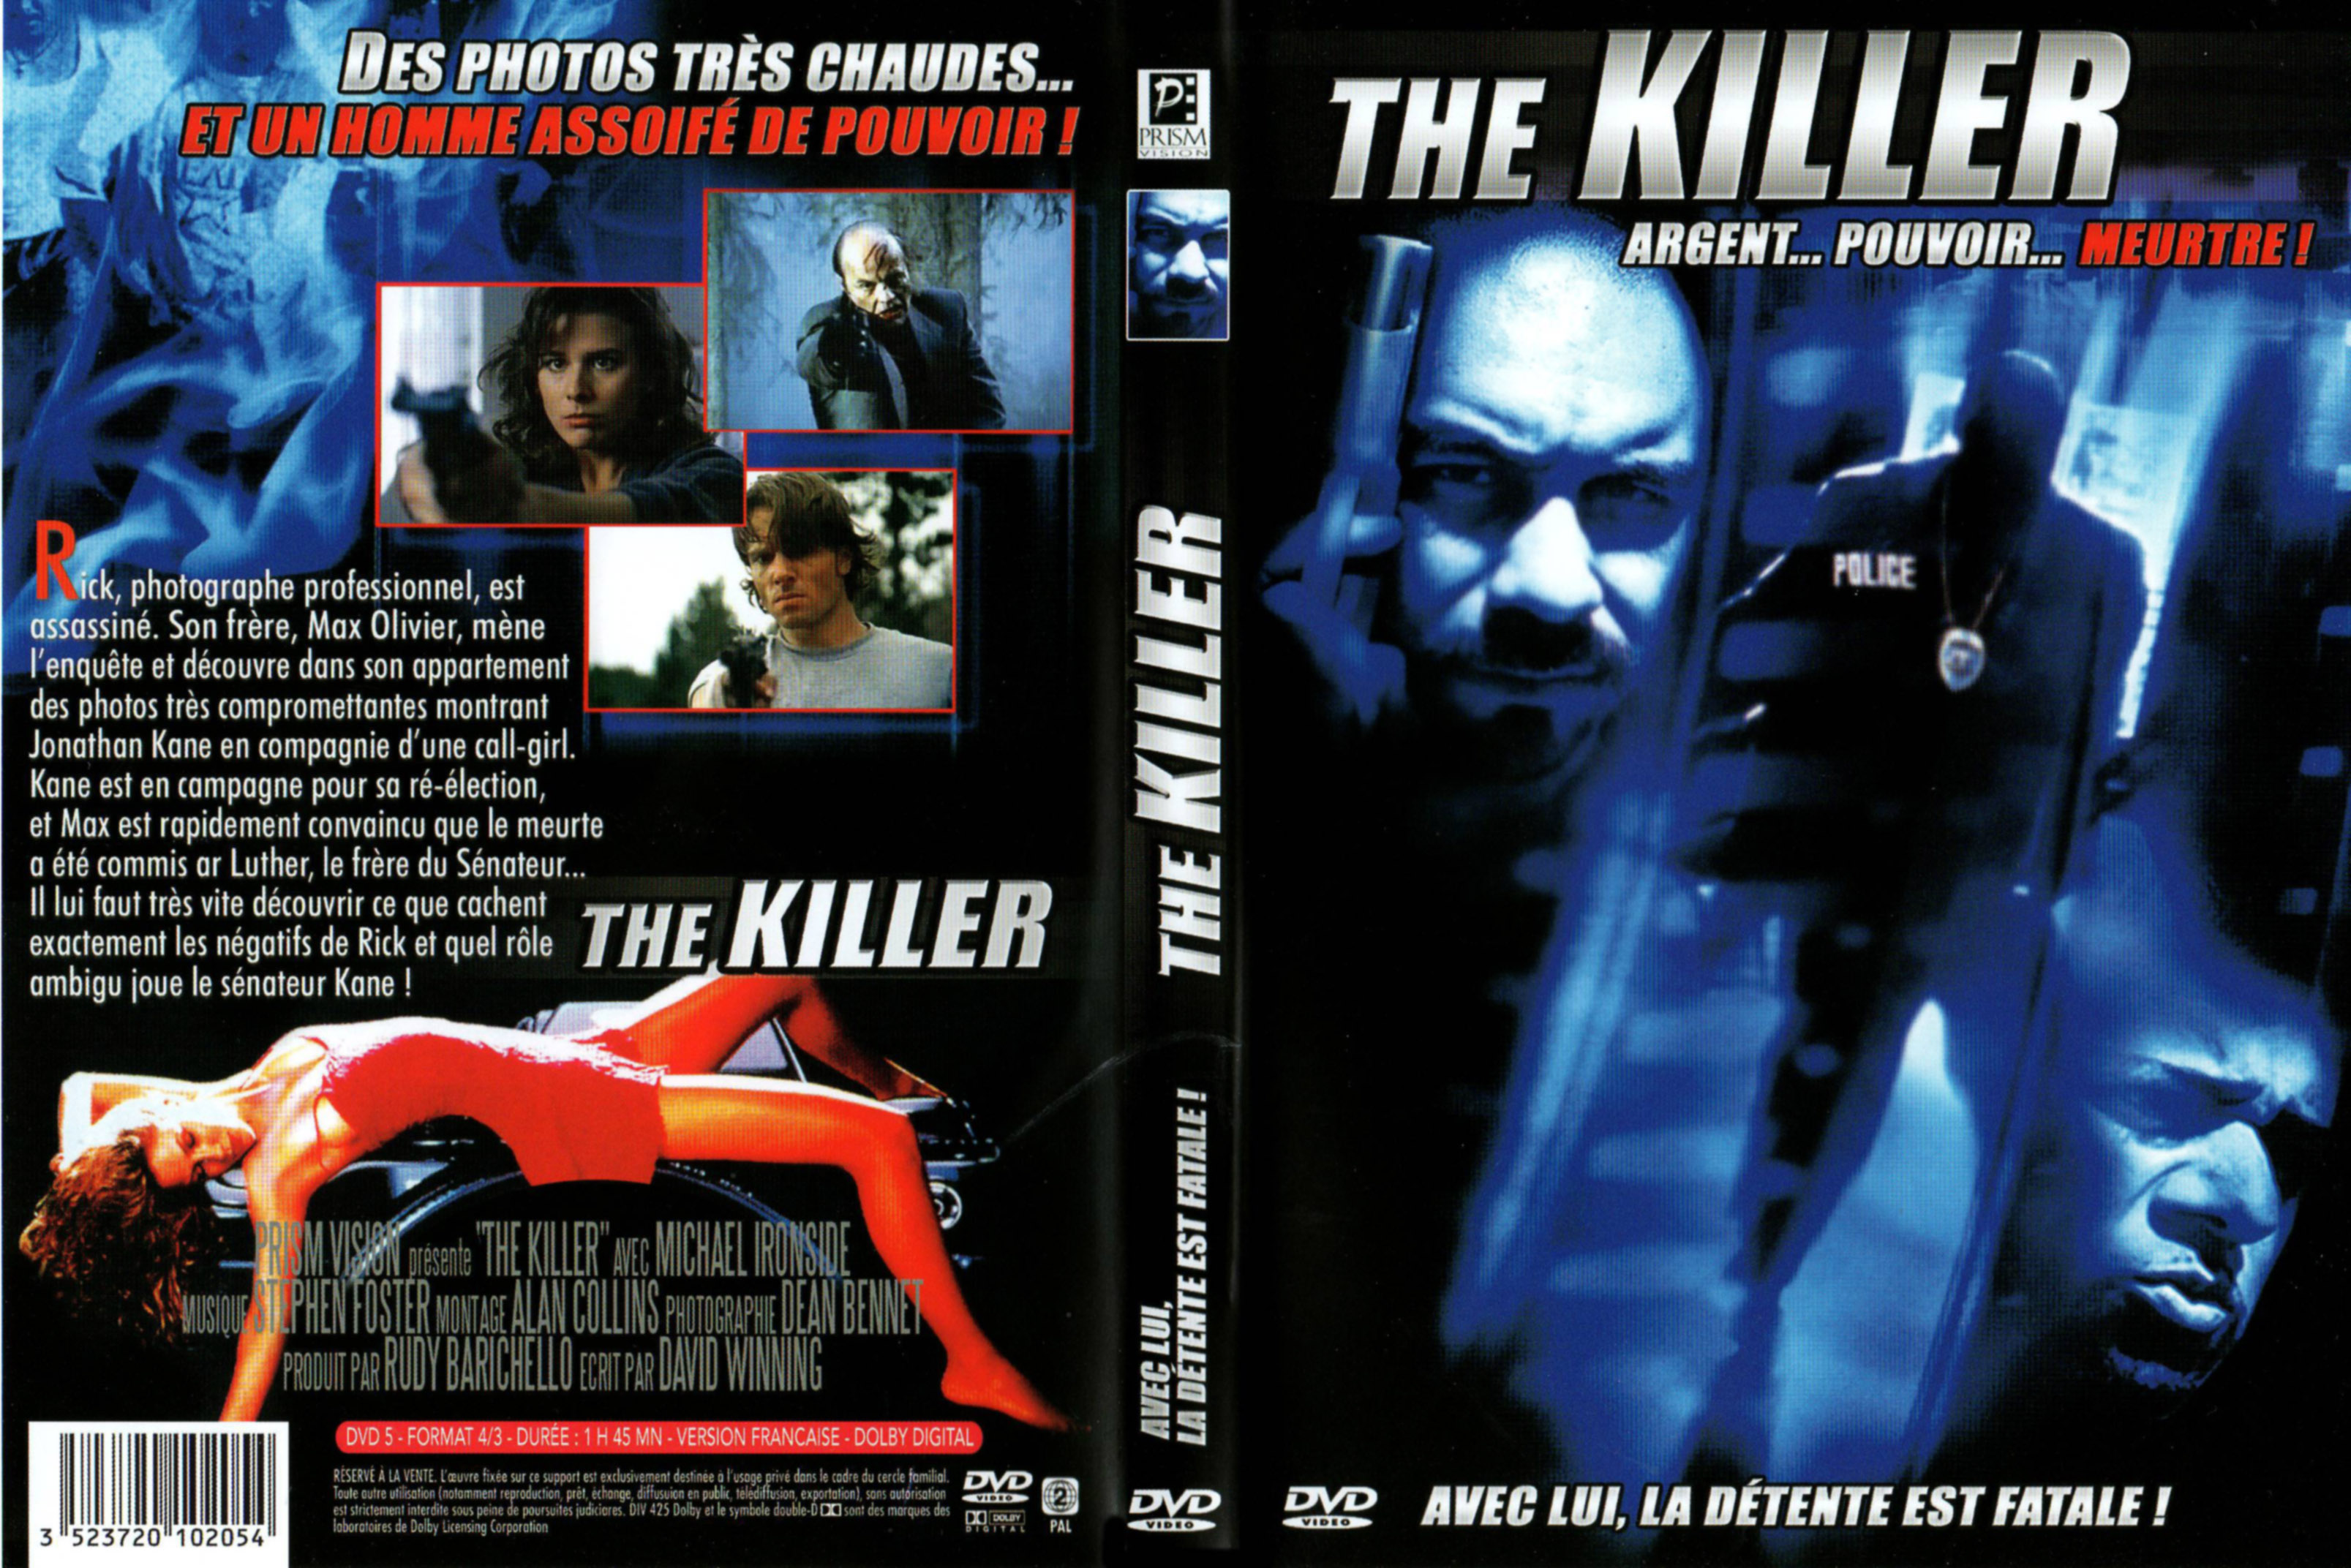 Jaquette DVD The killer (Michael Ironside)